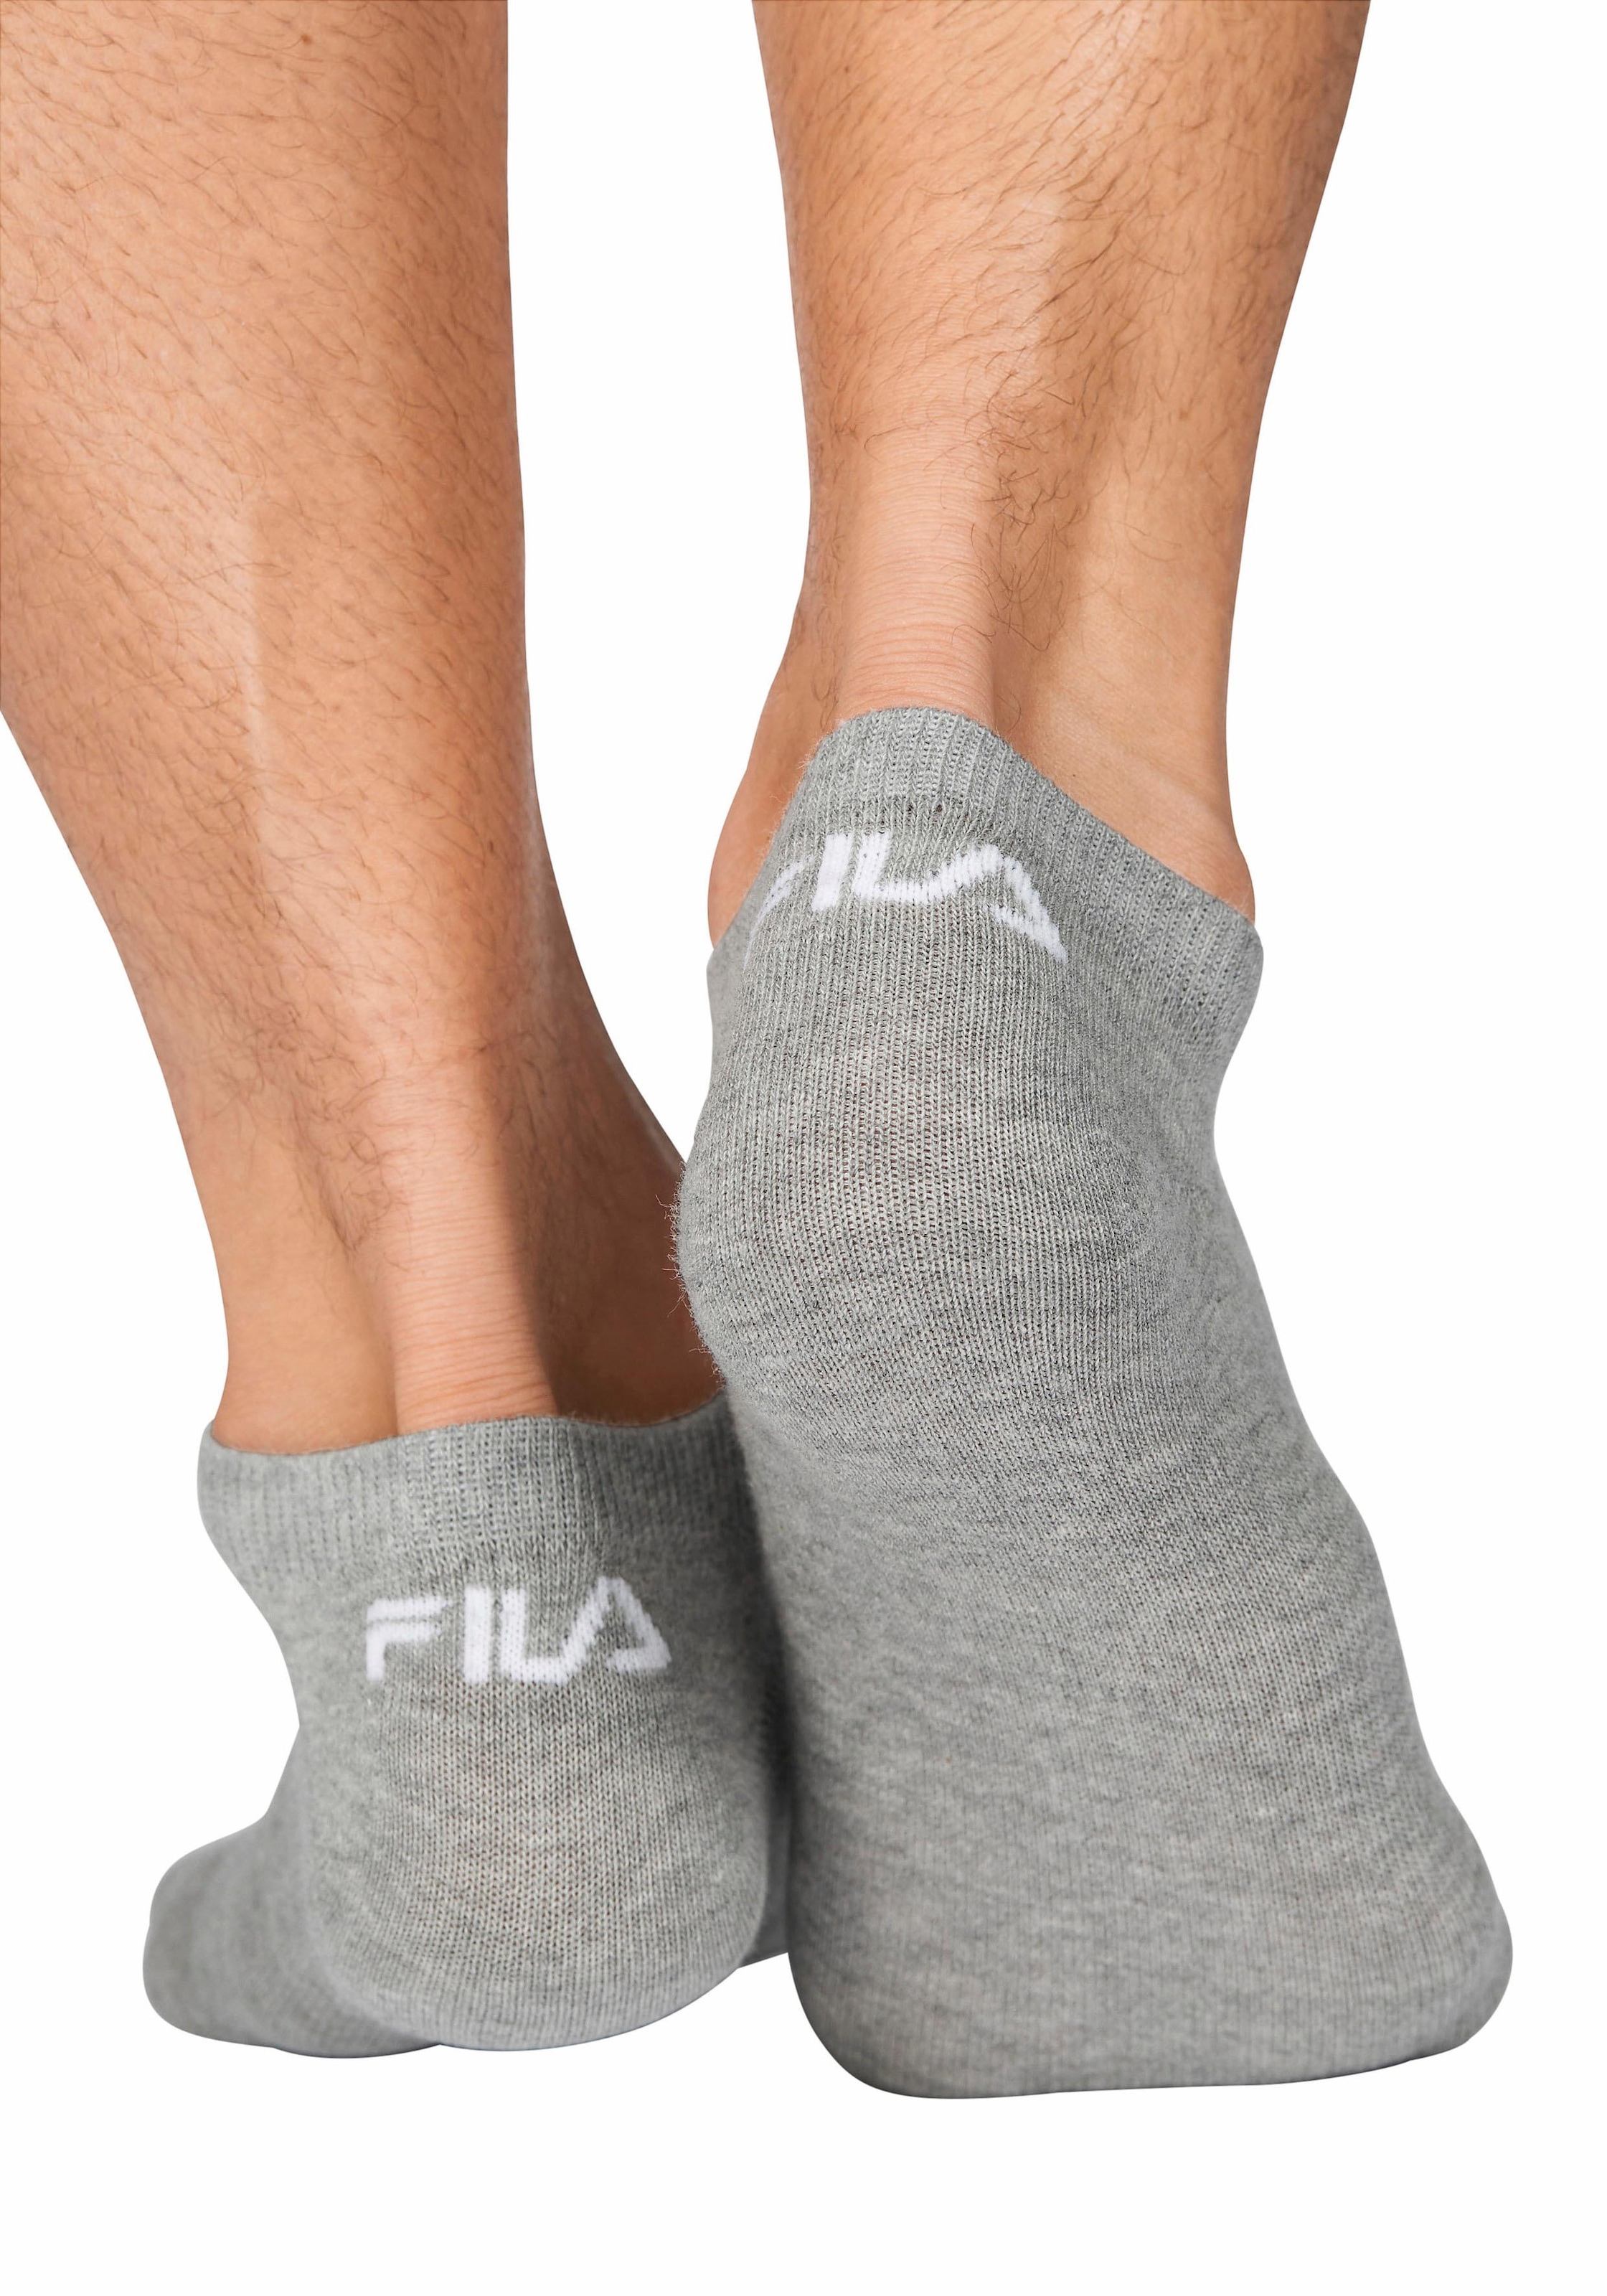 Fila Sneakersocken, (3 Paar), mit eingestricktem Logo an der Ferse